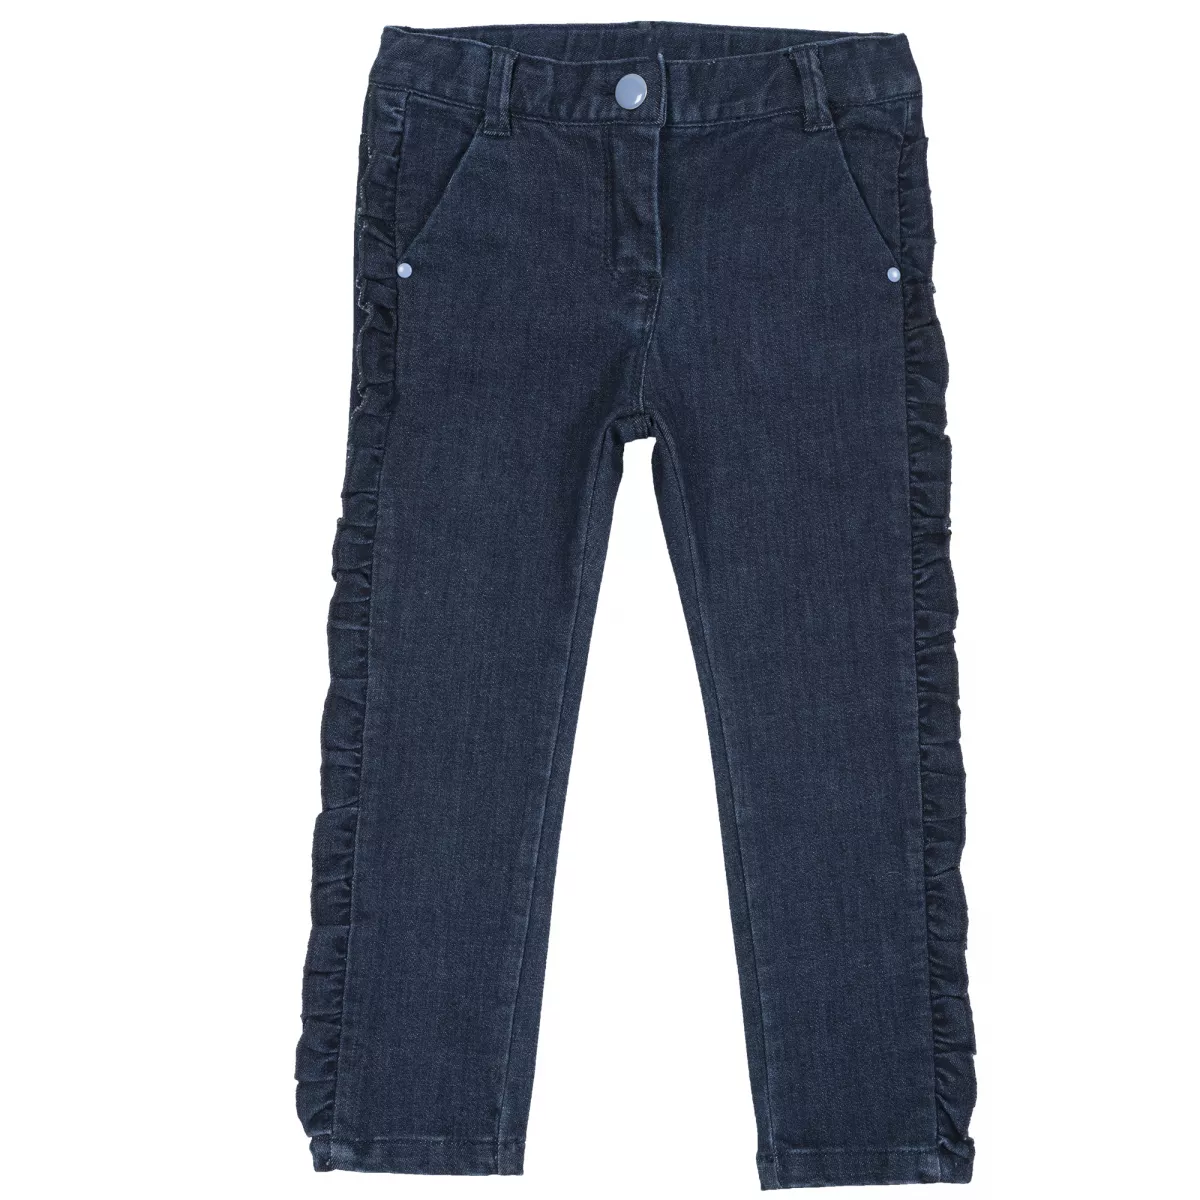 Pantalon copii Chicco, albastru inchis, 110